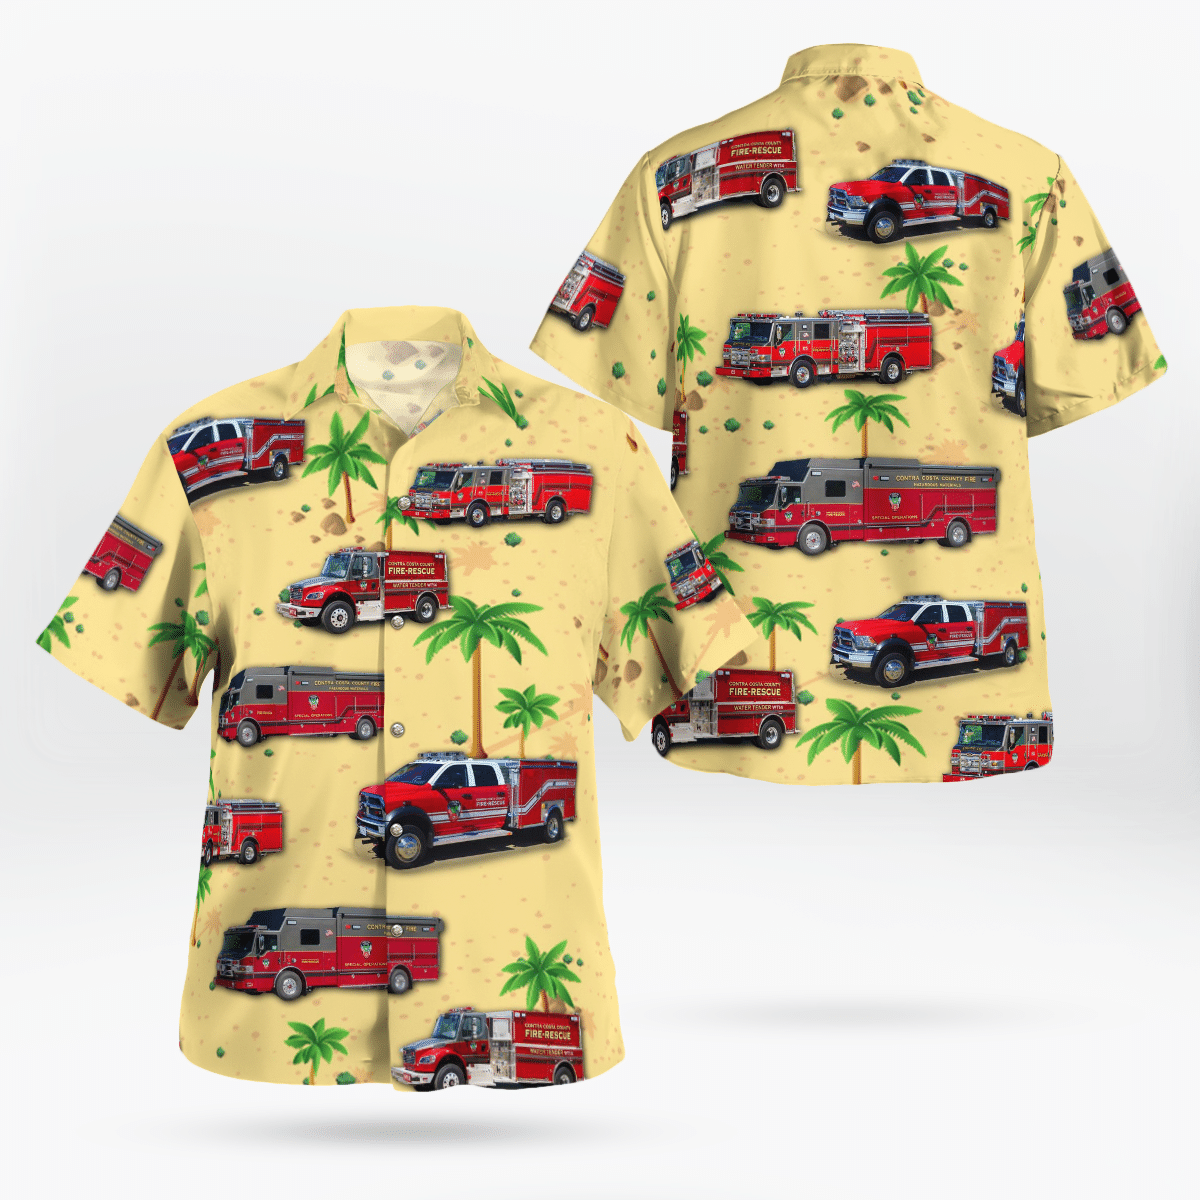 Listed below are some High-quality Aloha Shirt 169